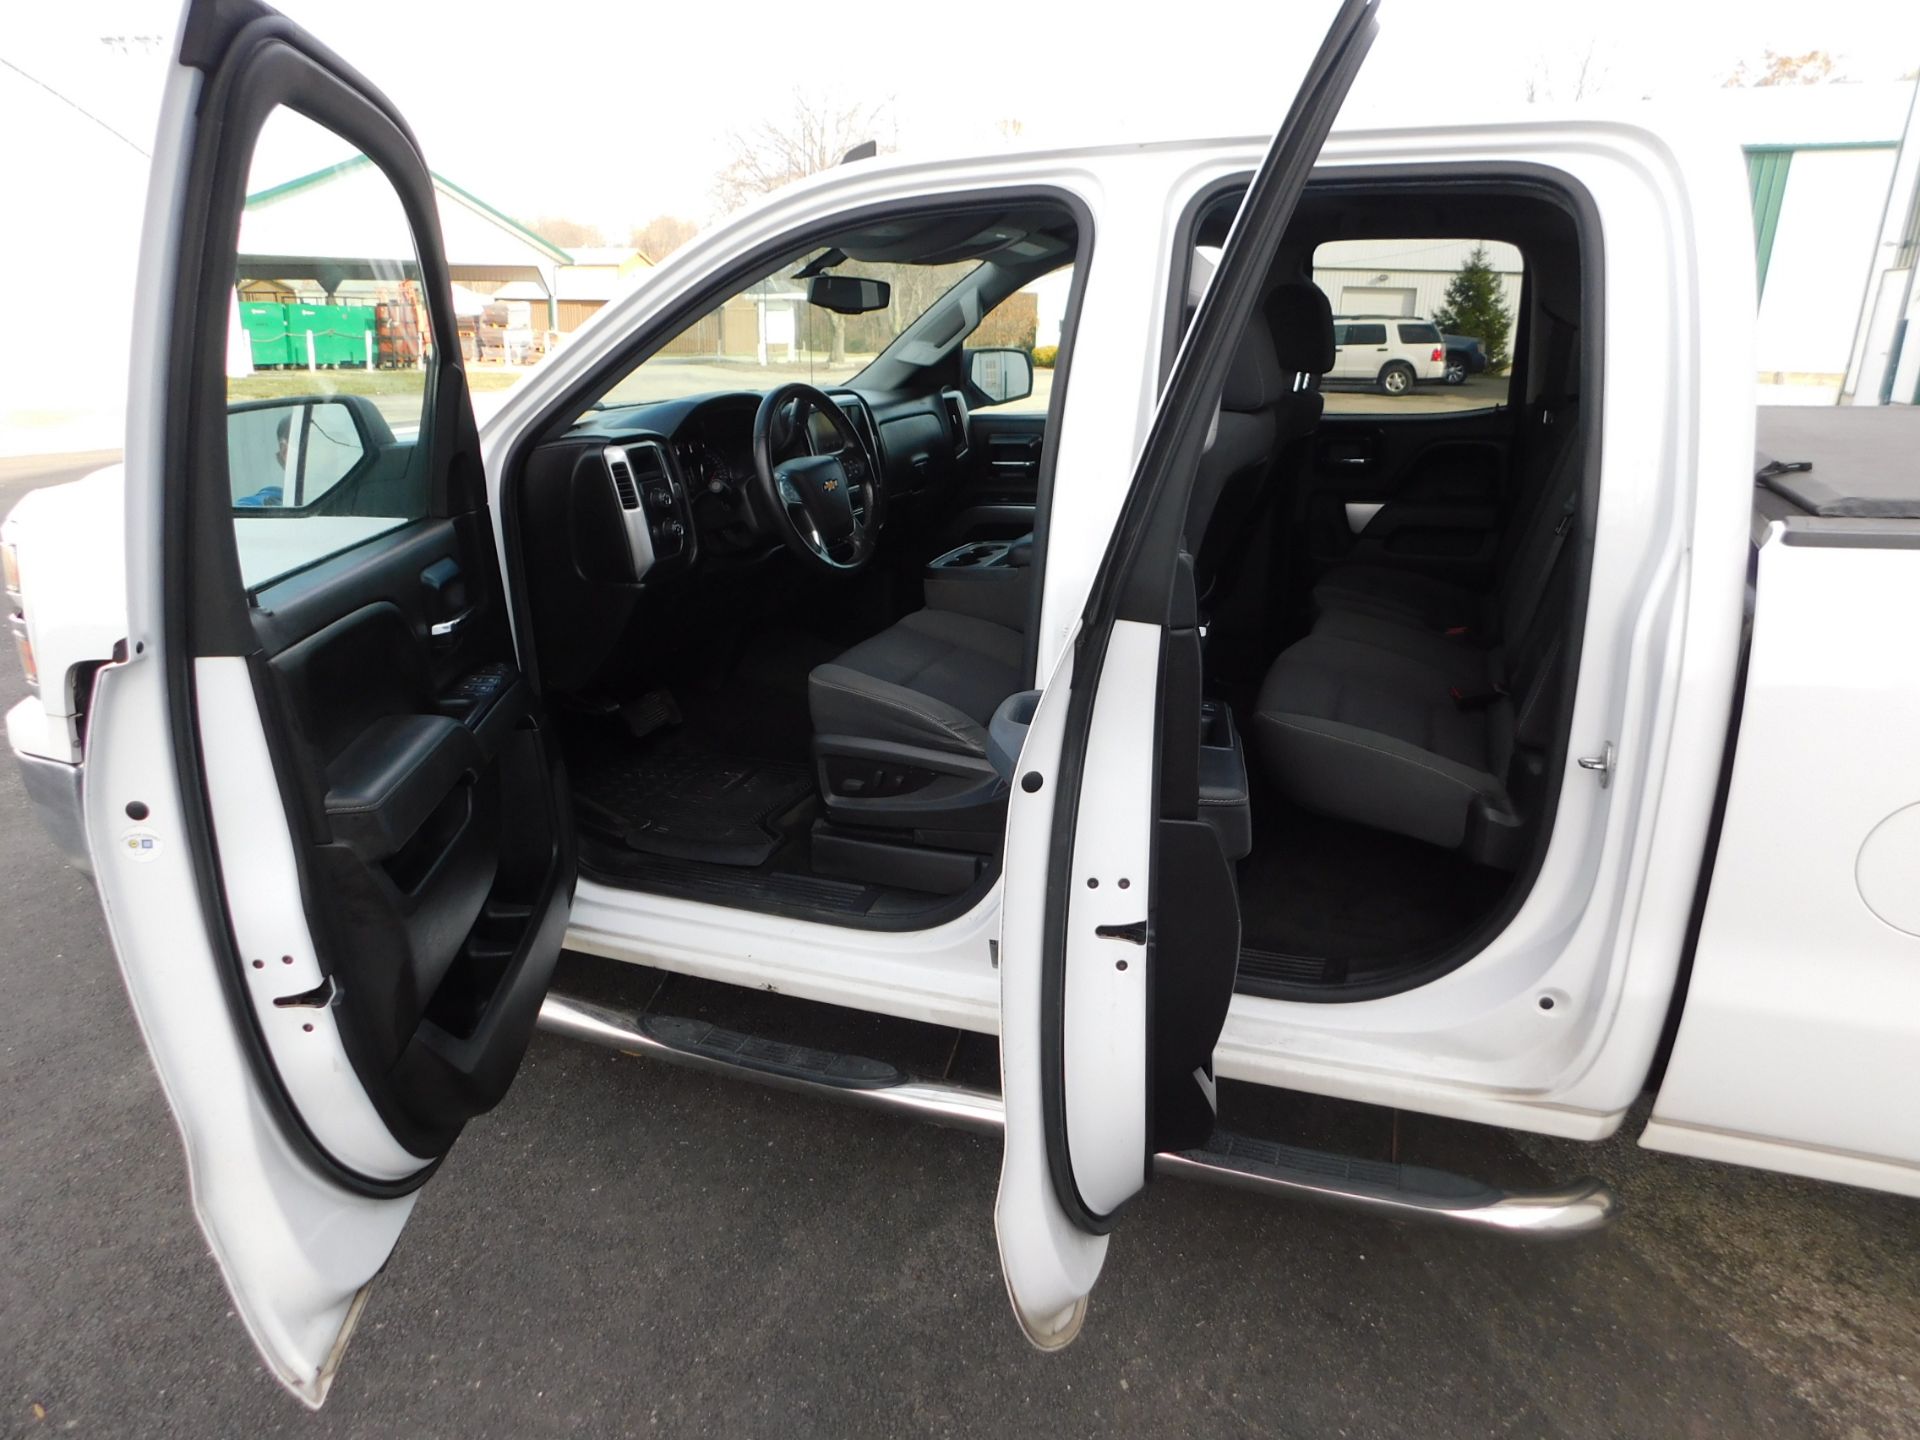 2014 Chevrolet Silverado LT Pickup, VIN 1GCVKREC3EZ139405, 4-Door 4 WD, Automatic, AM/FM, AC, Cruise - Image 31 of 51